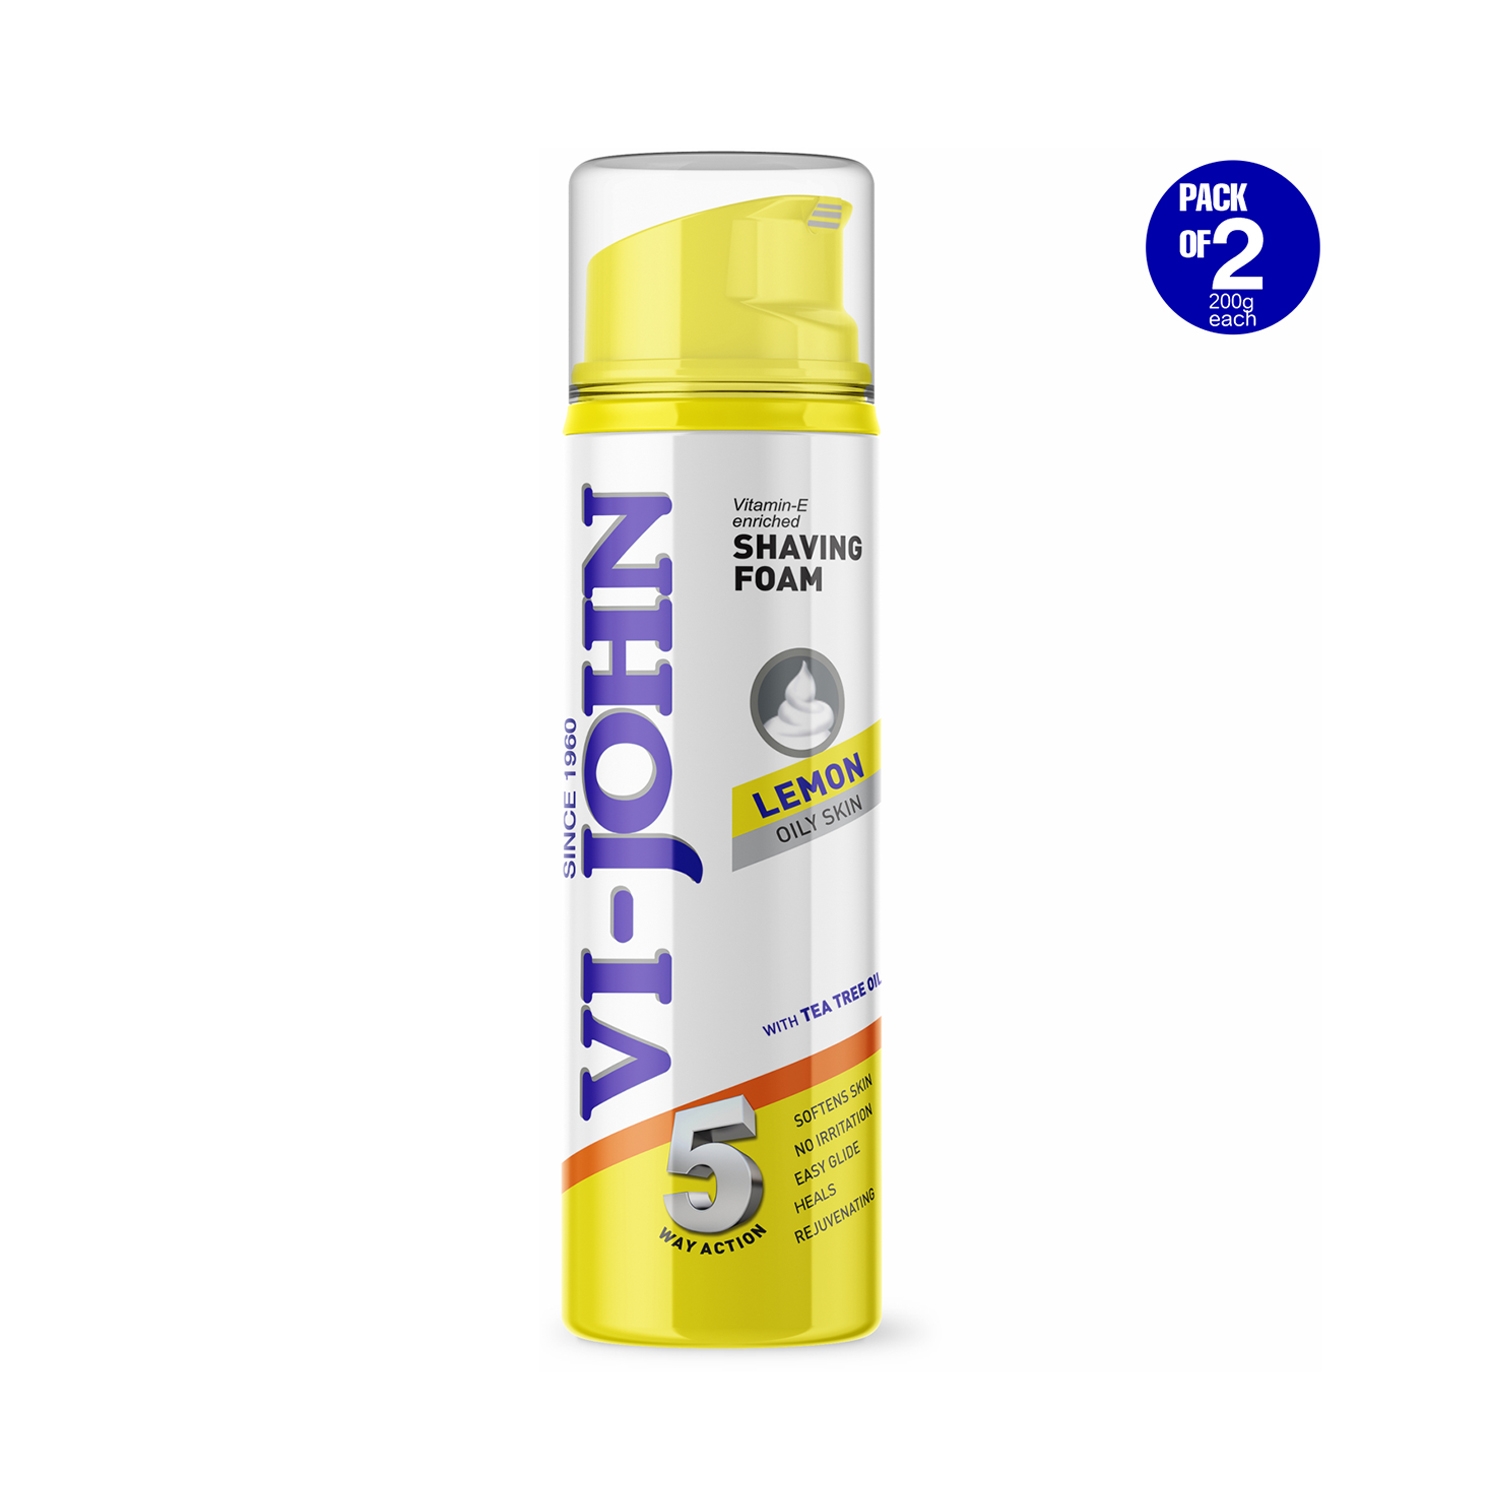 VI-JOHN | VI-JOHN Classic Lemon 5 Way Action Shaving Foam (Pack of 2)